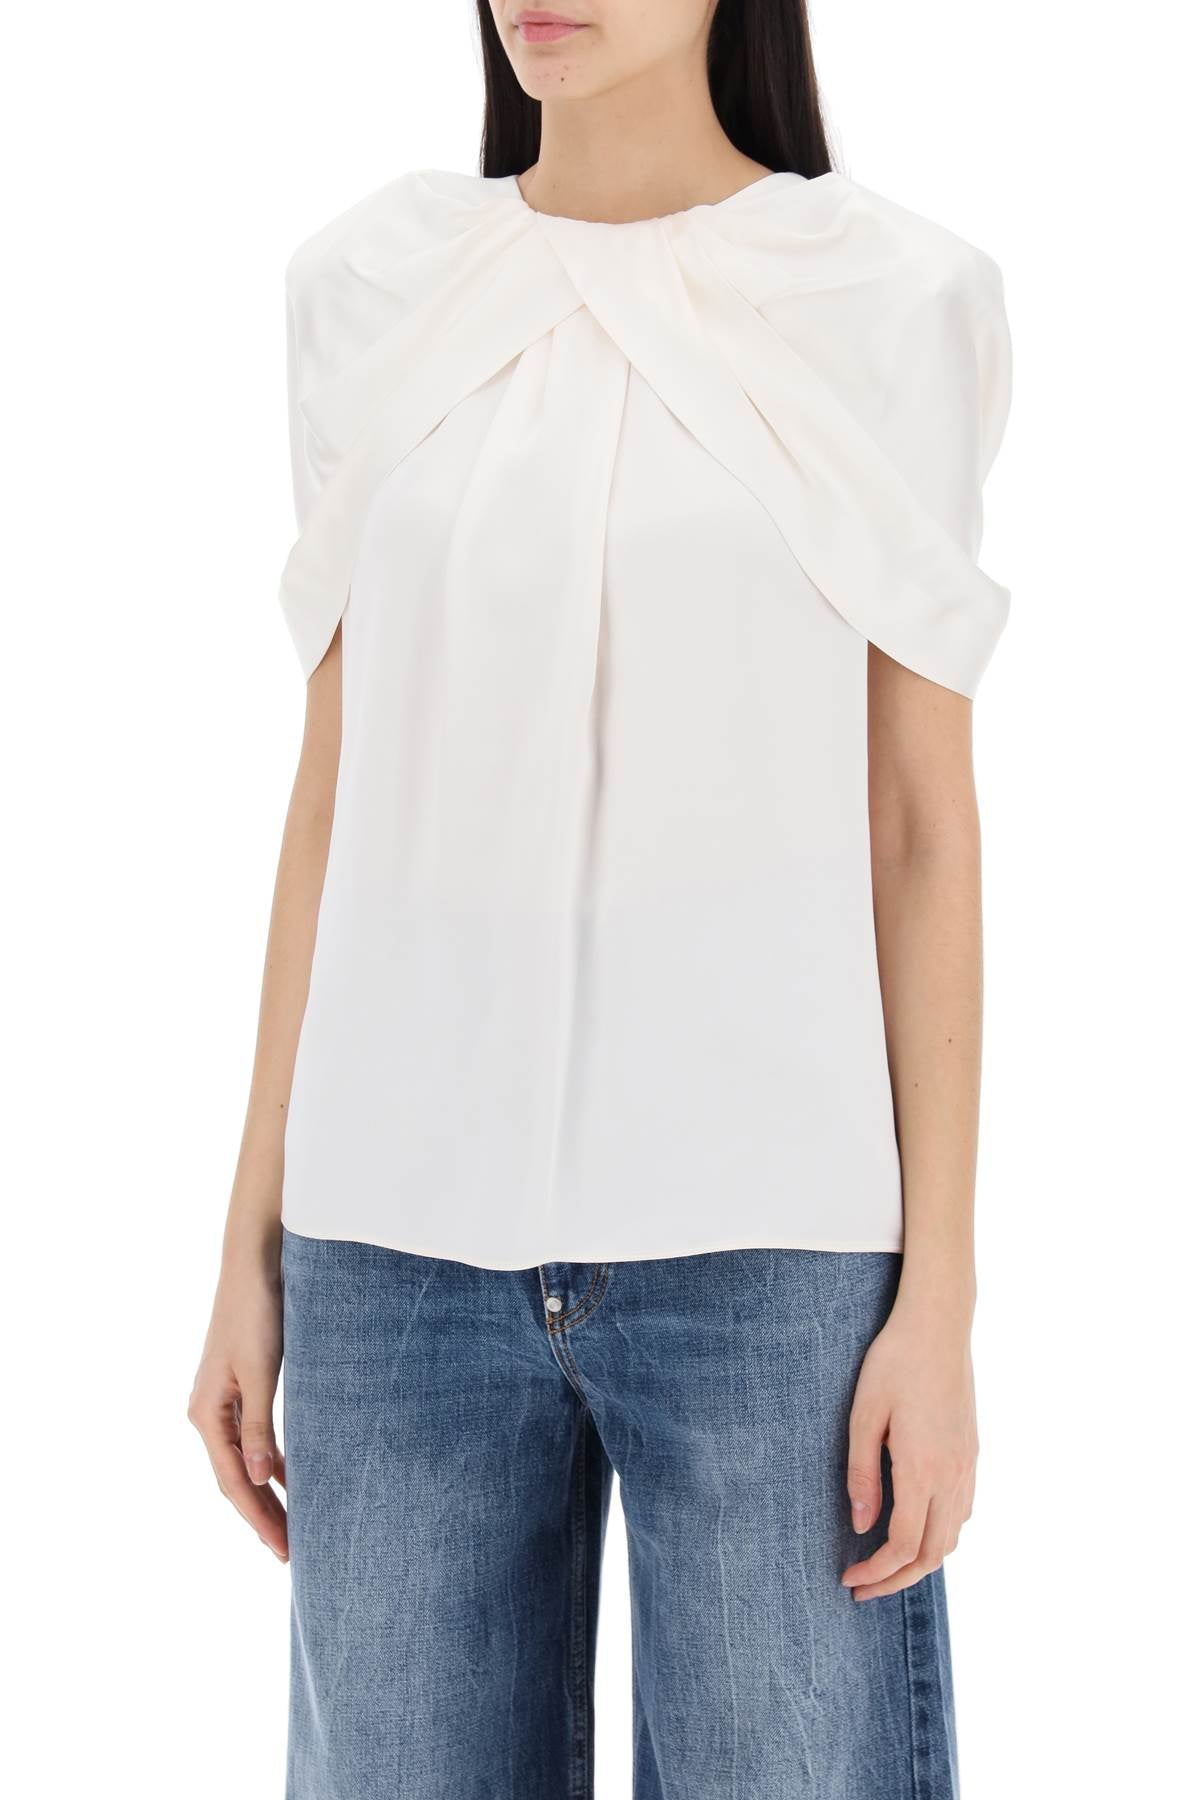 Stella mccartney satin blouse with petal sleeves-3